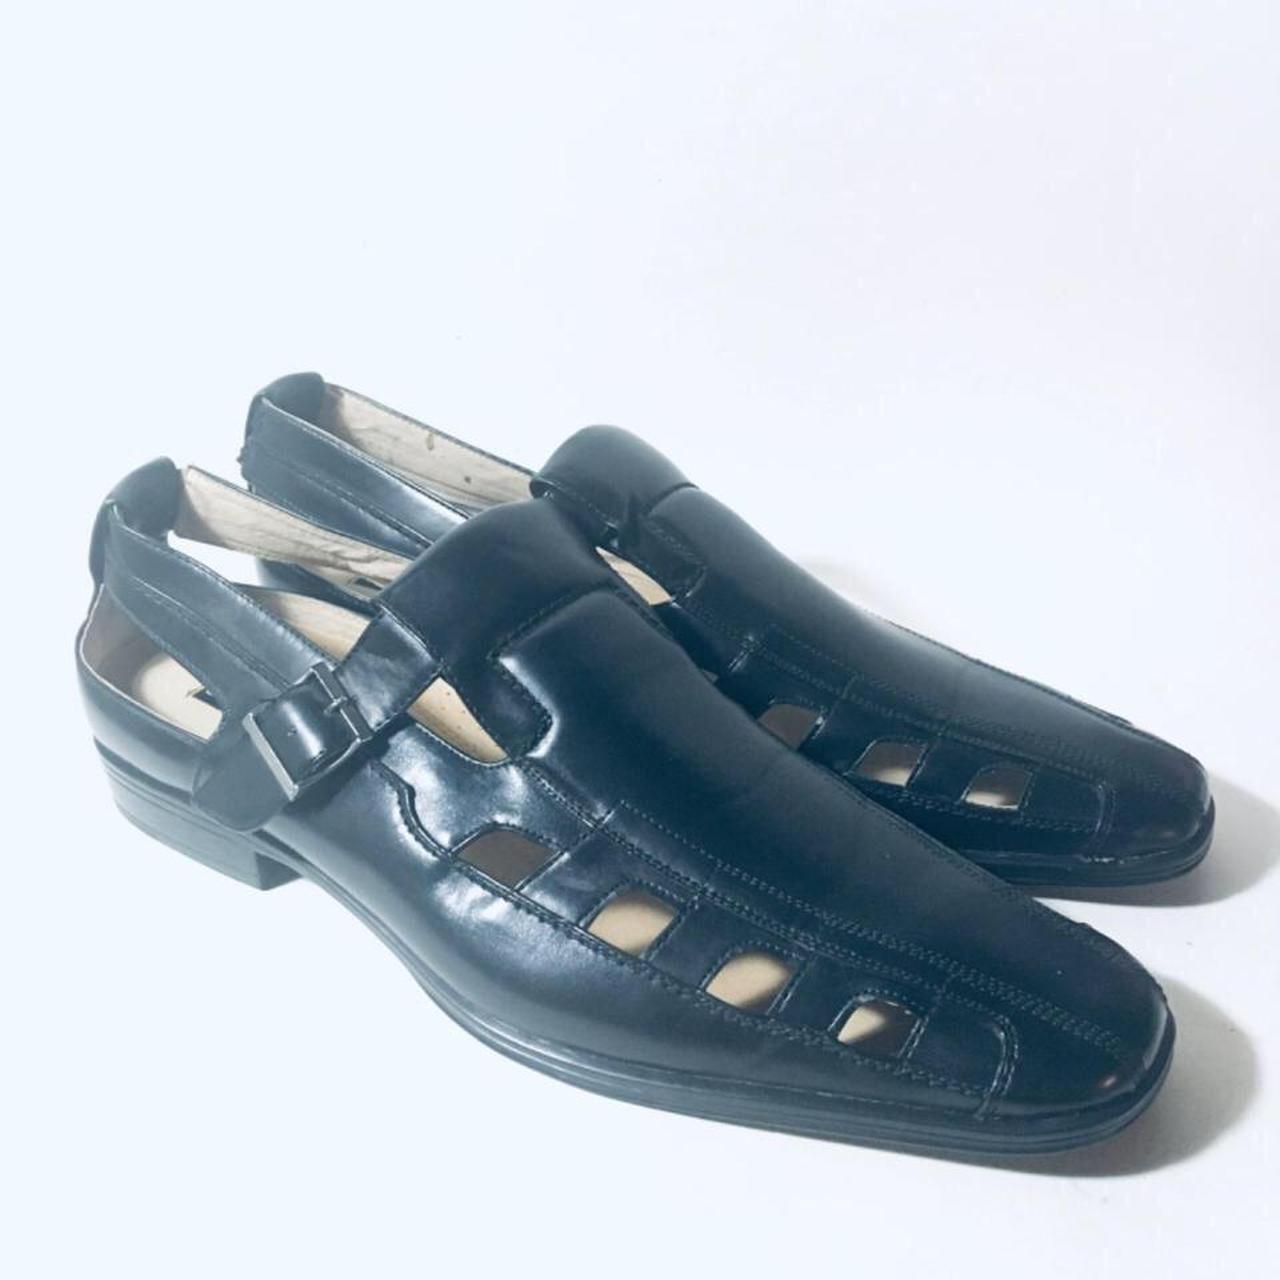 Stacy Adams Black Leather Dress Sandals 24731-001... - Depop